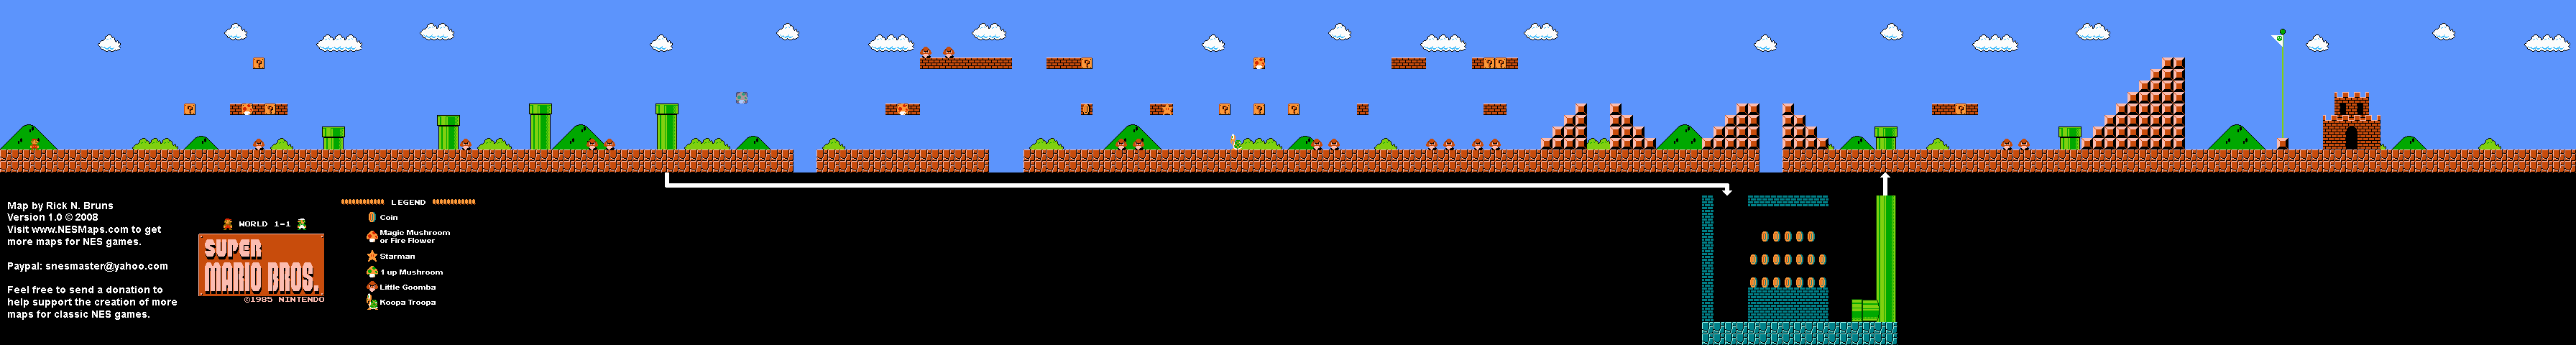 Super Mario Brothers - World 1-1 Nintendo NES Map